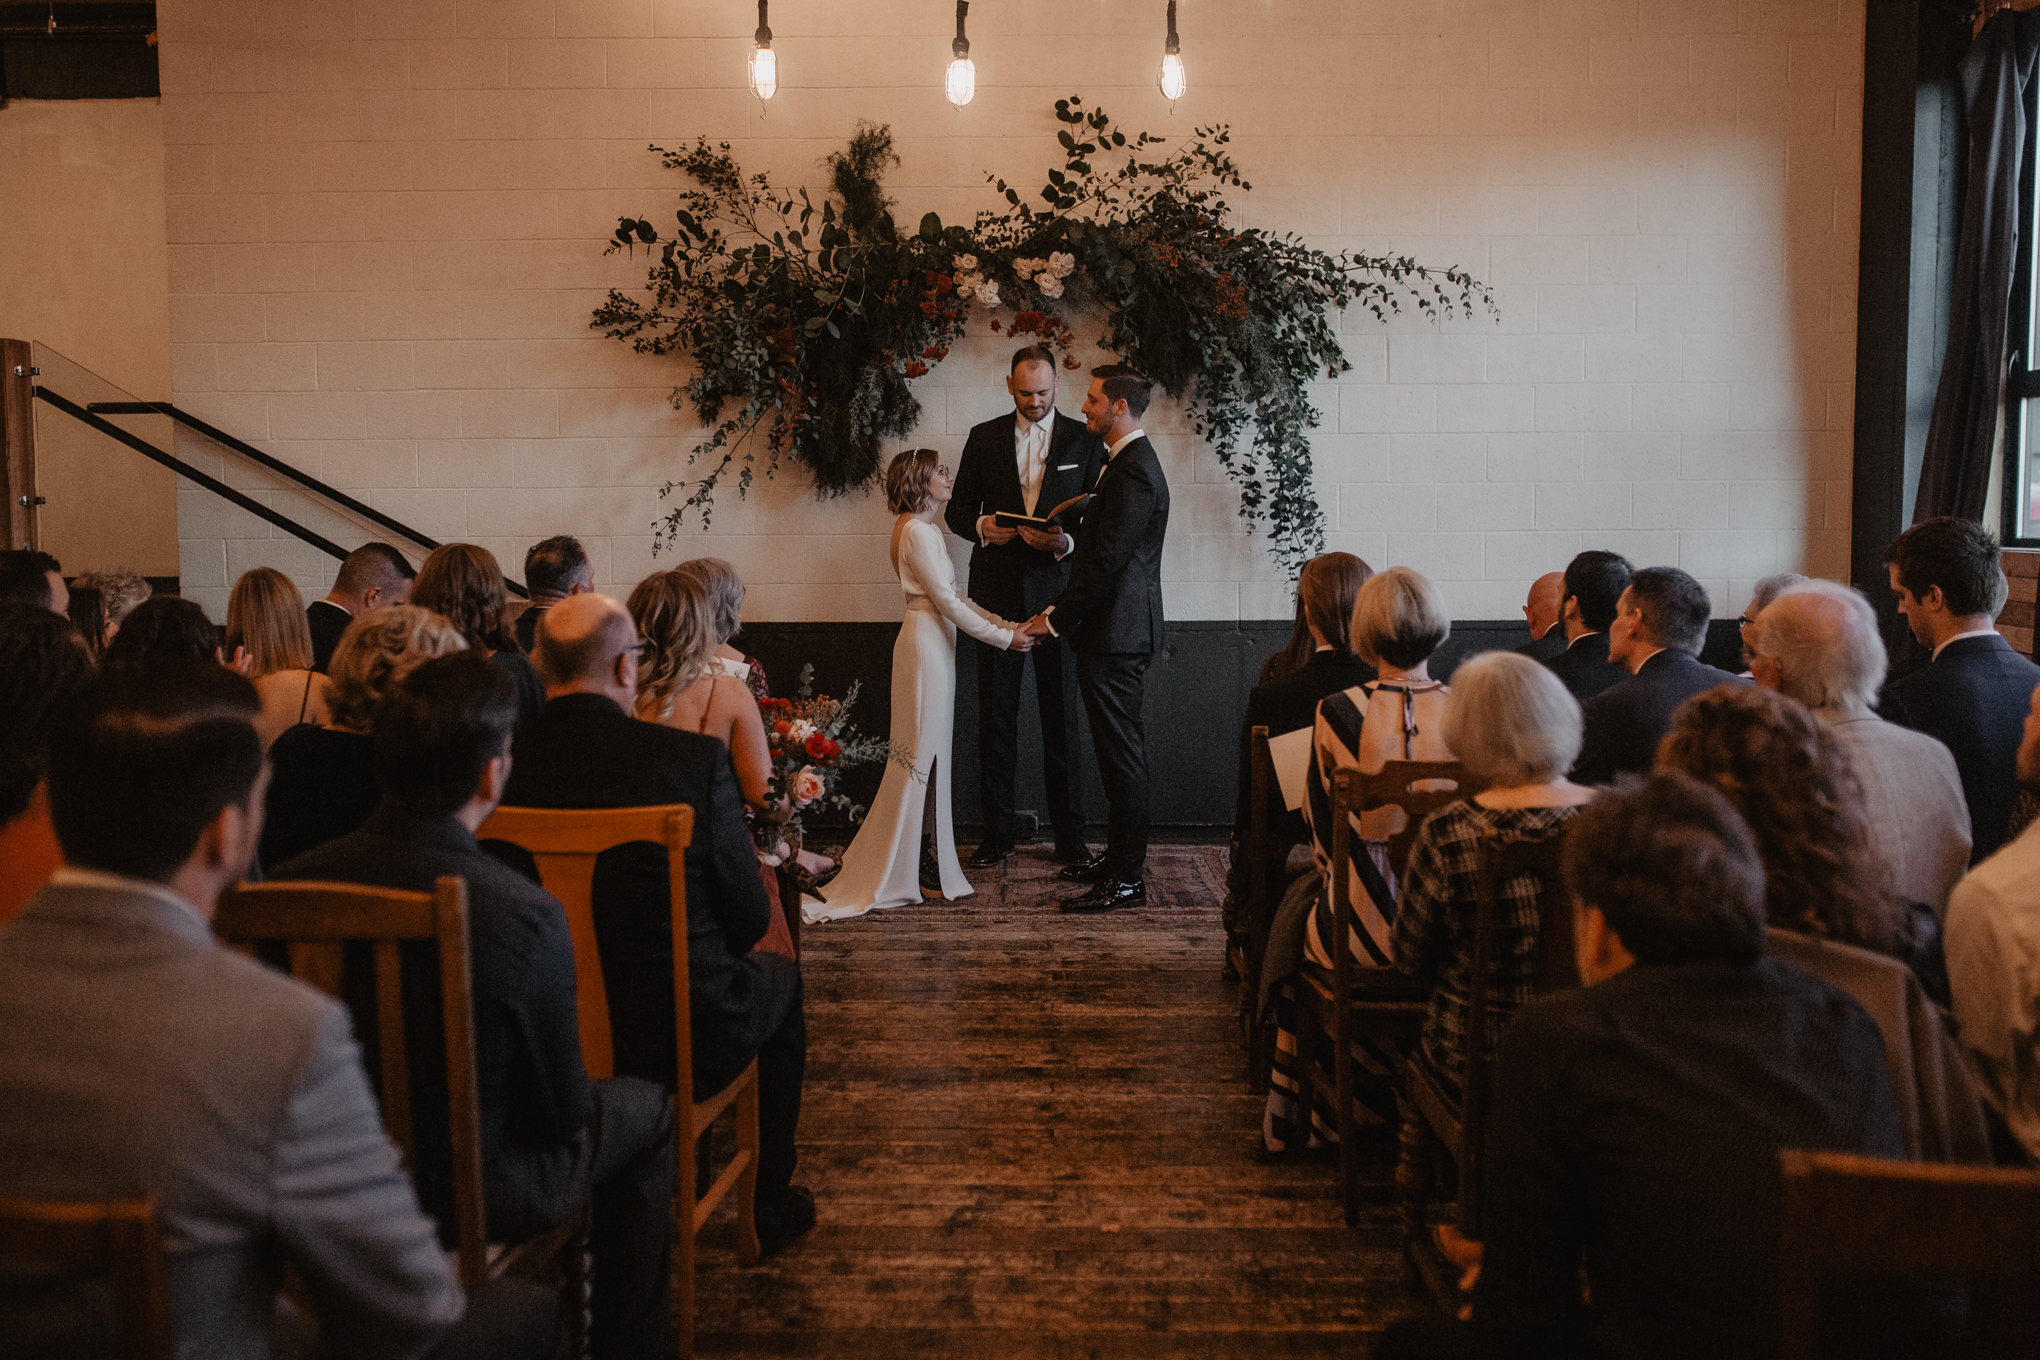 A wedding ceremony at Union/Pine